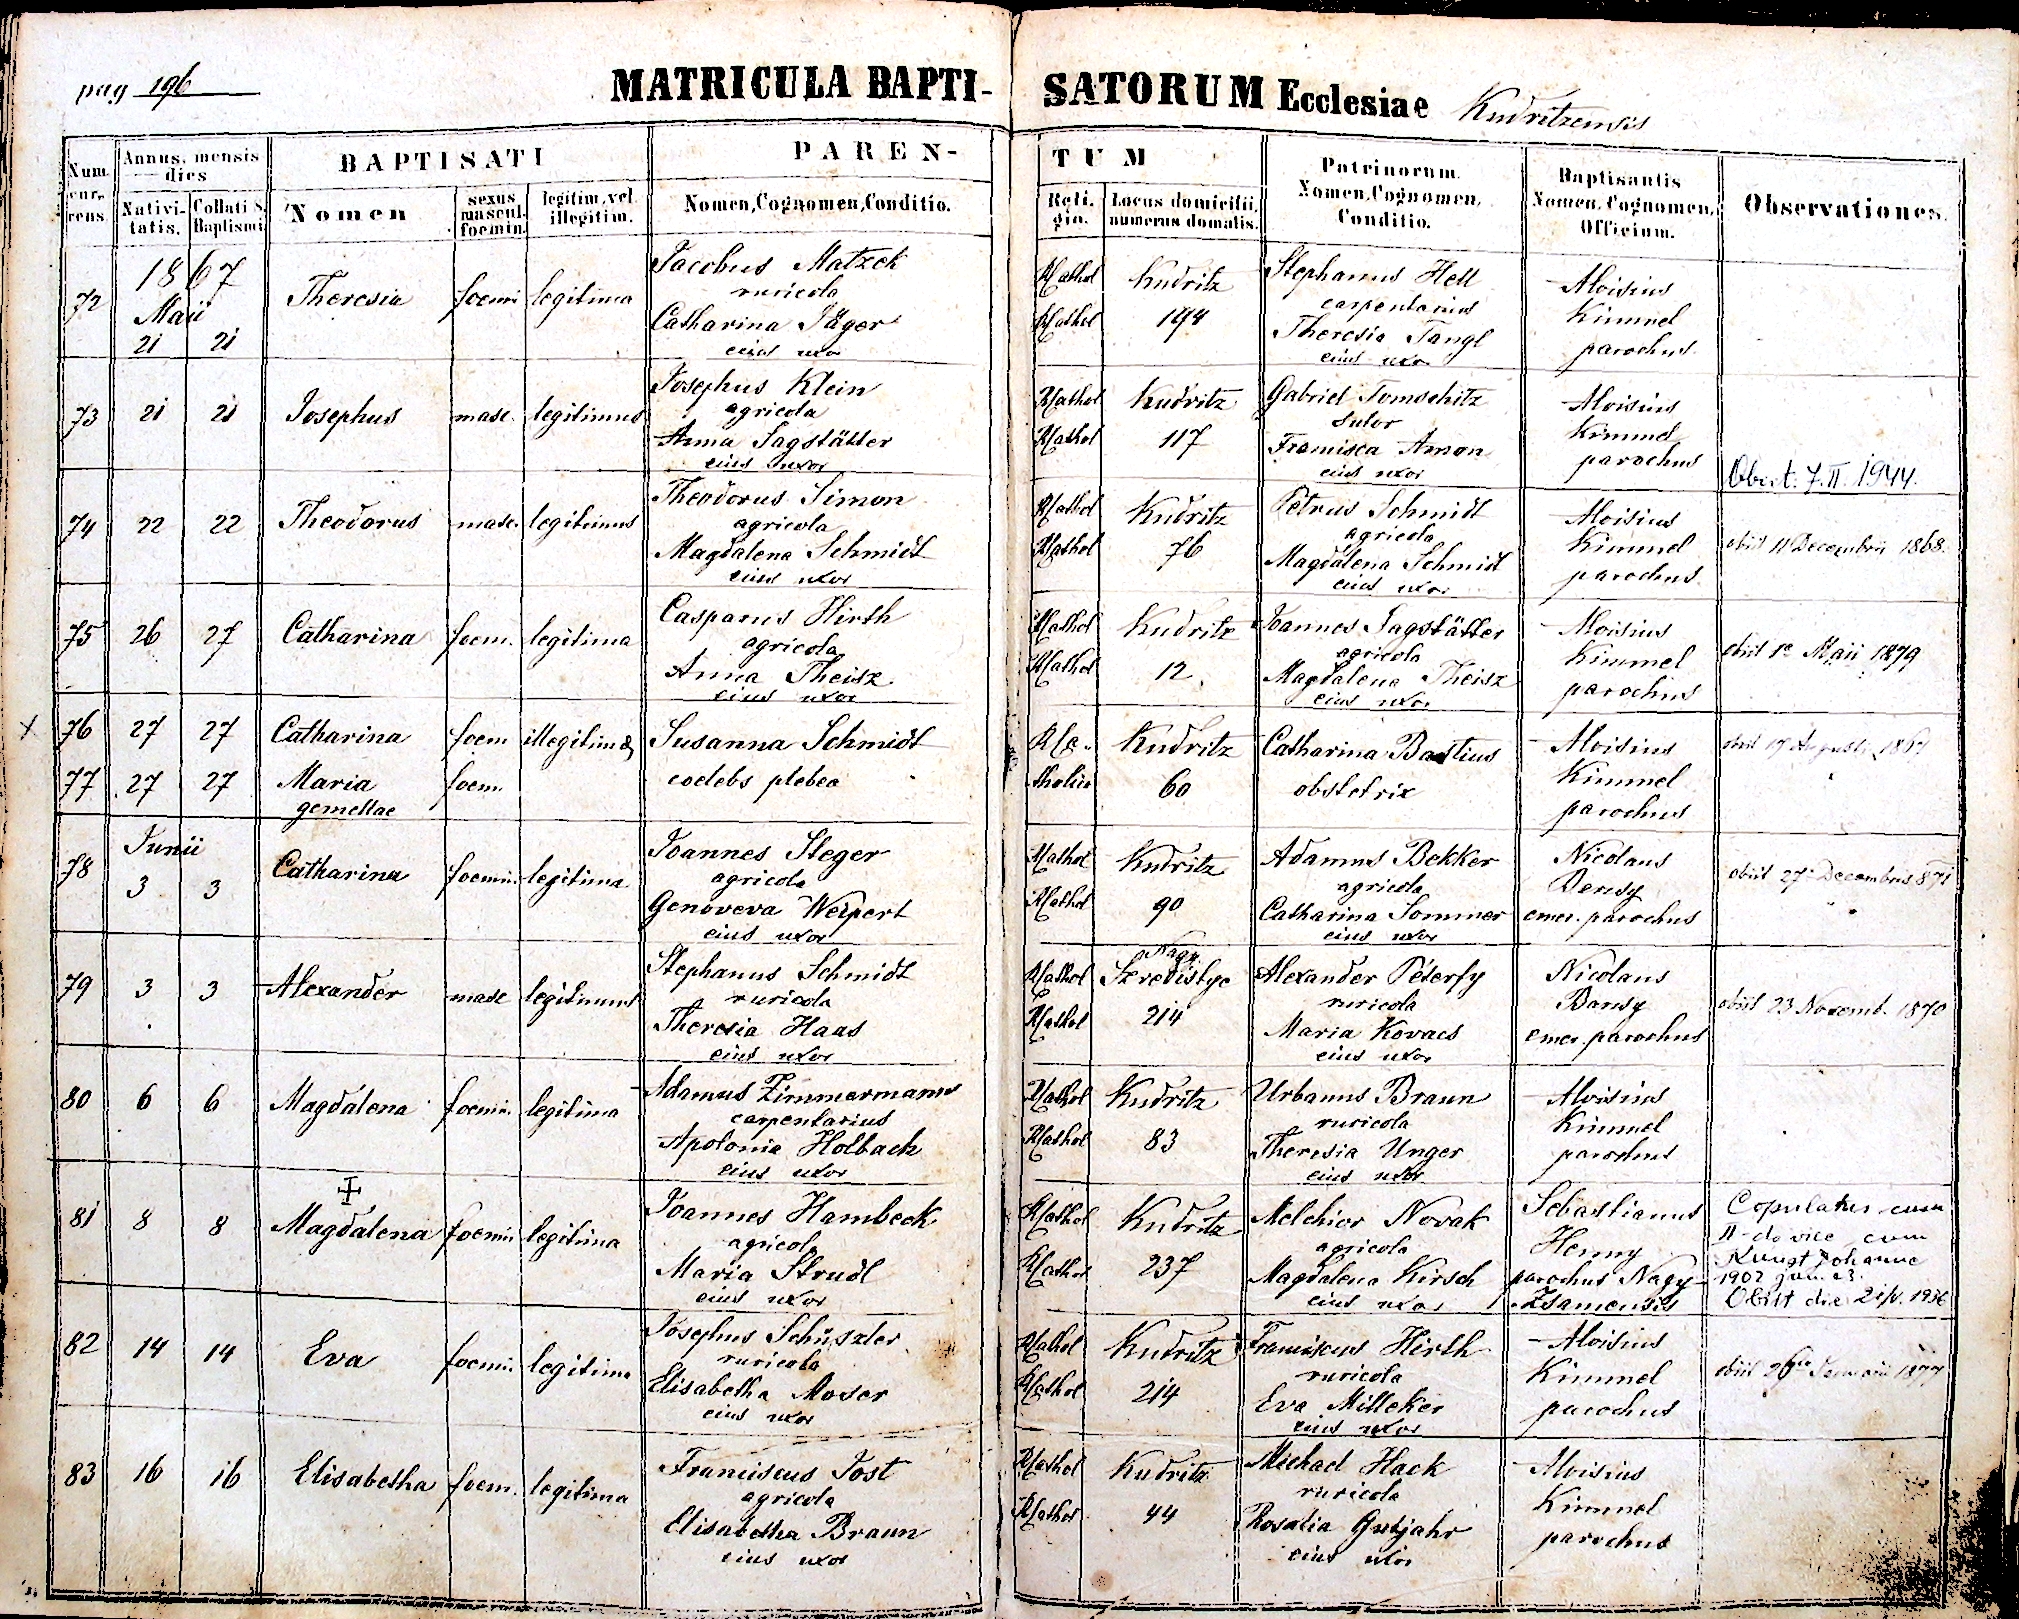 images/church_records/BIRTHS/1852-1870B/196